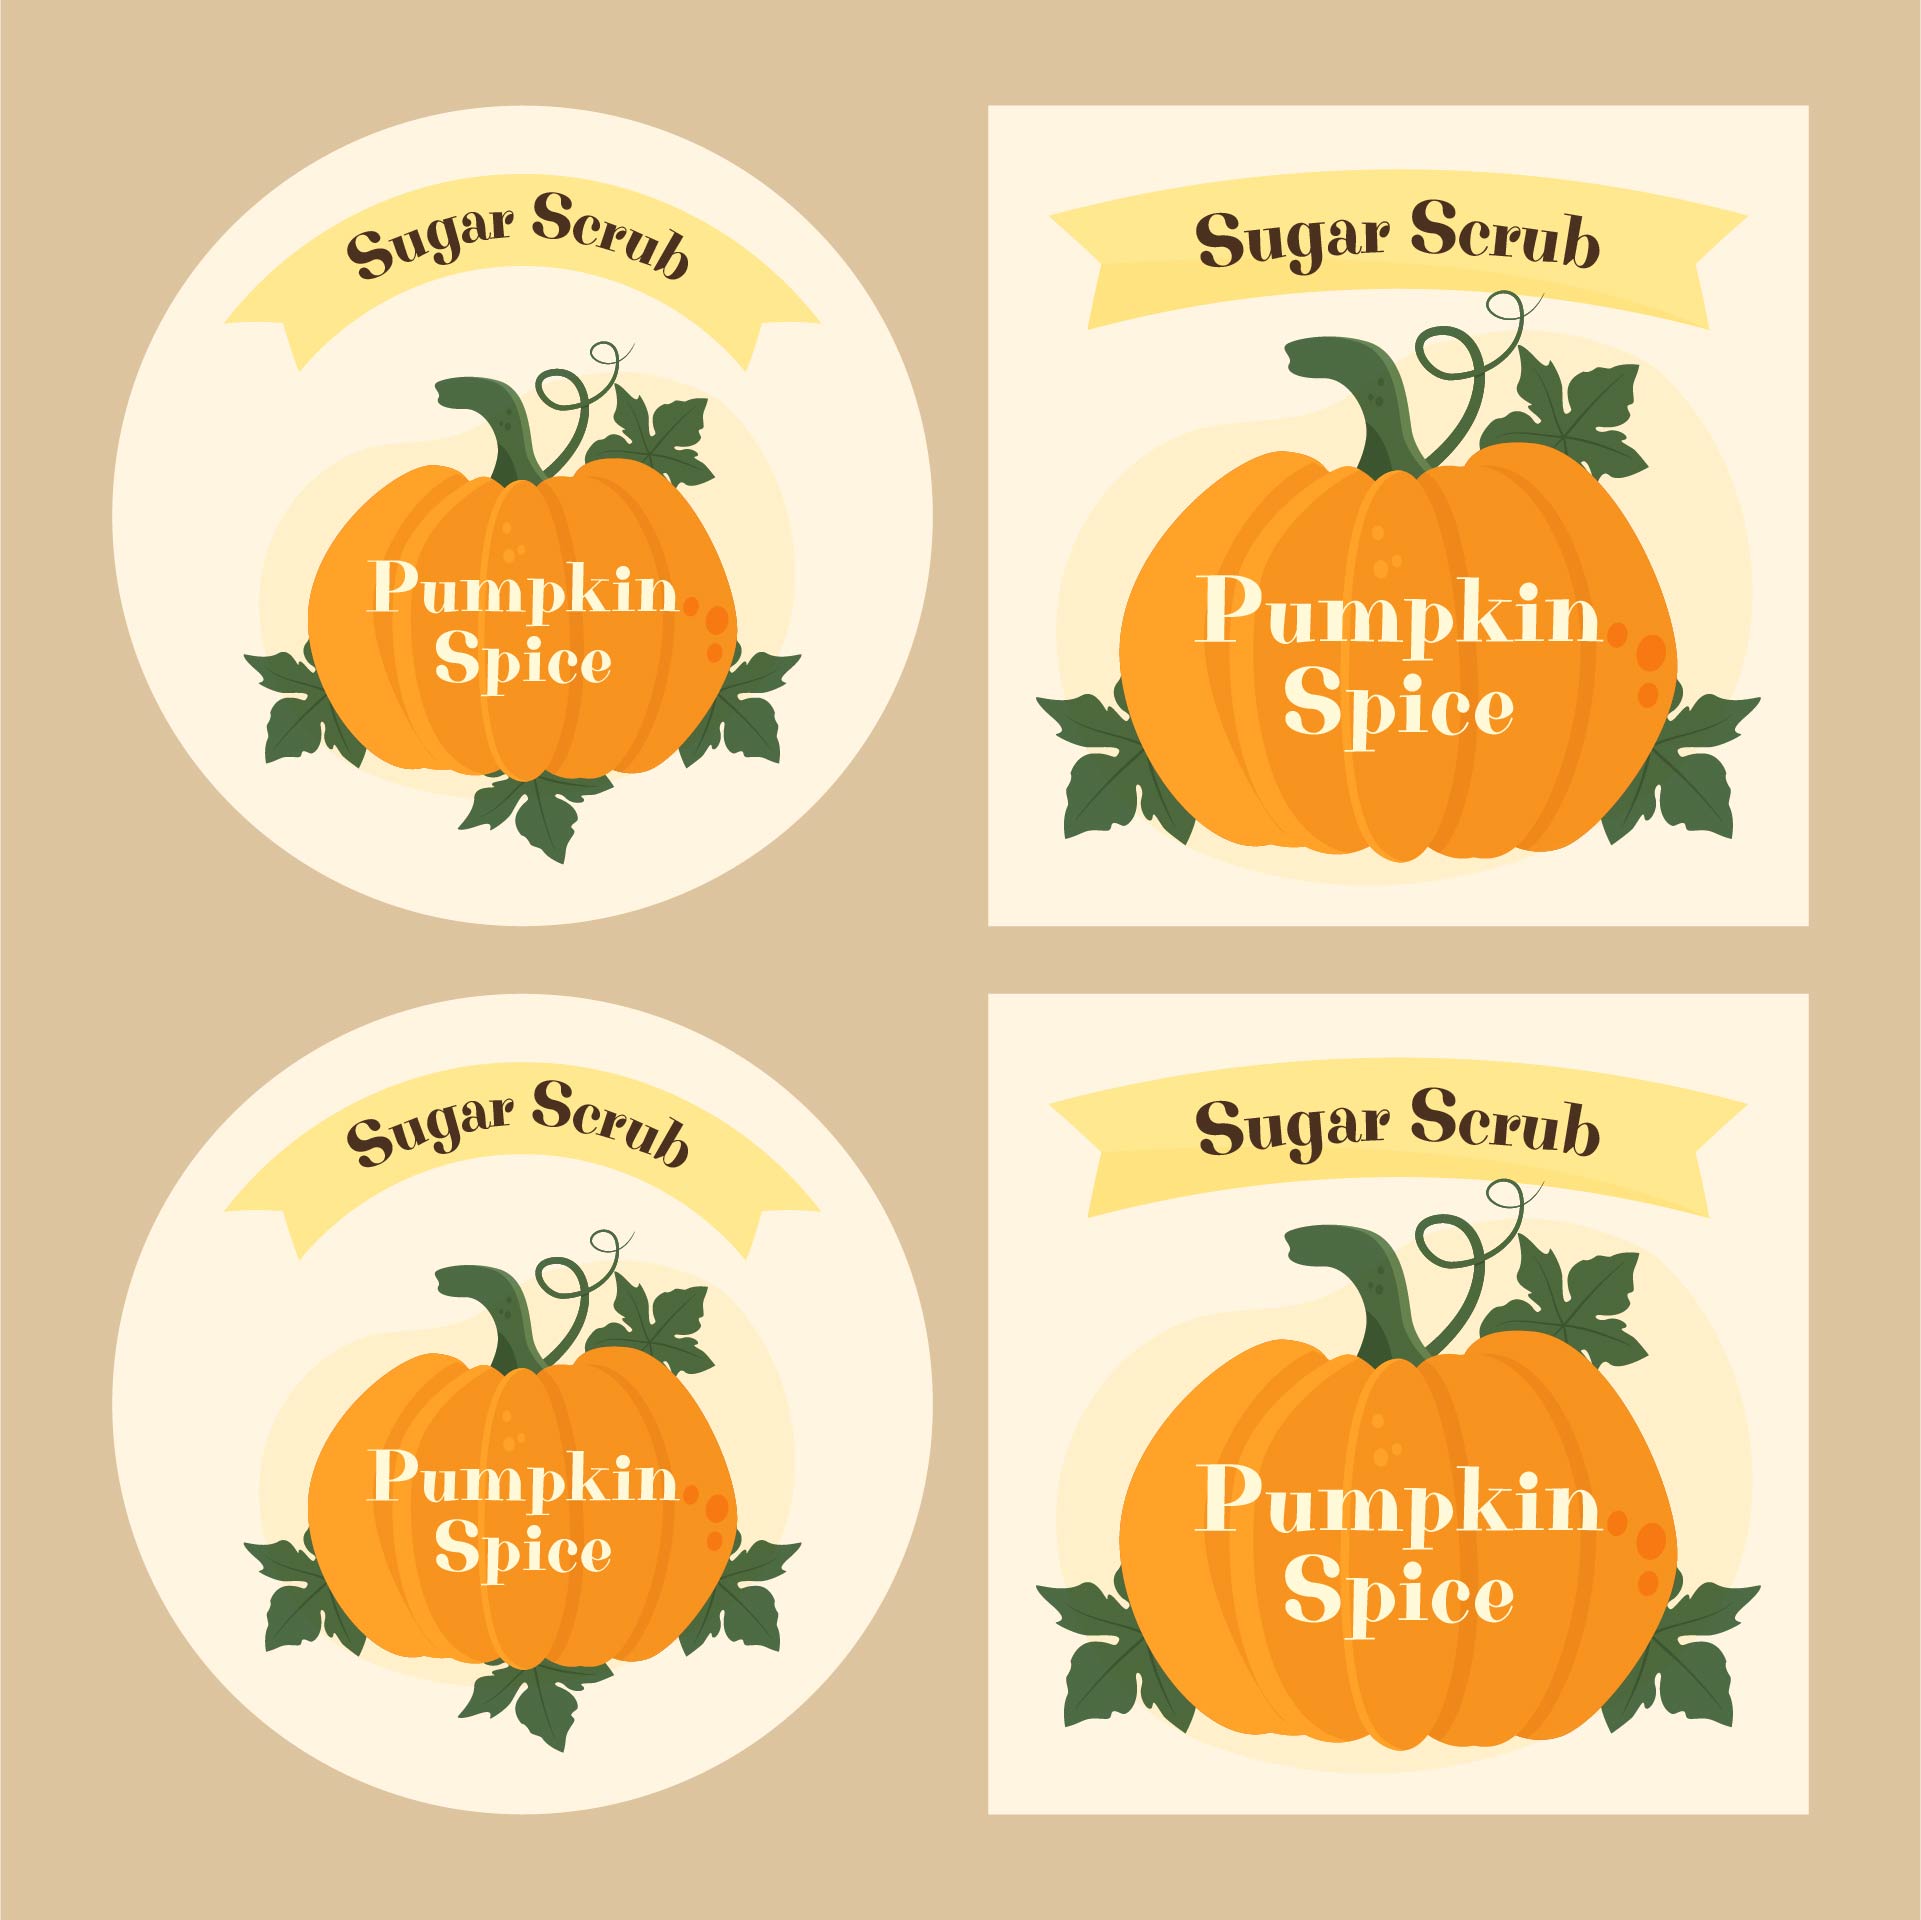 Pumpkin Spice Sugar Scrub Labels